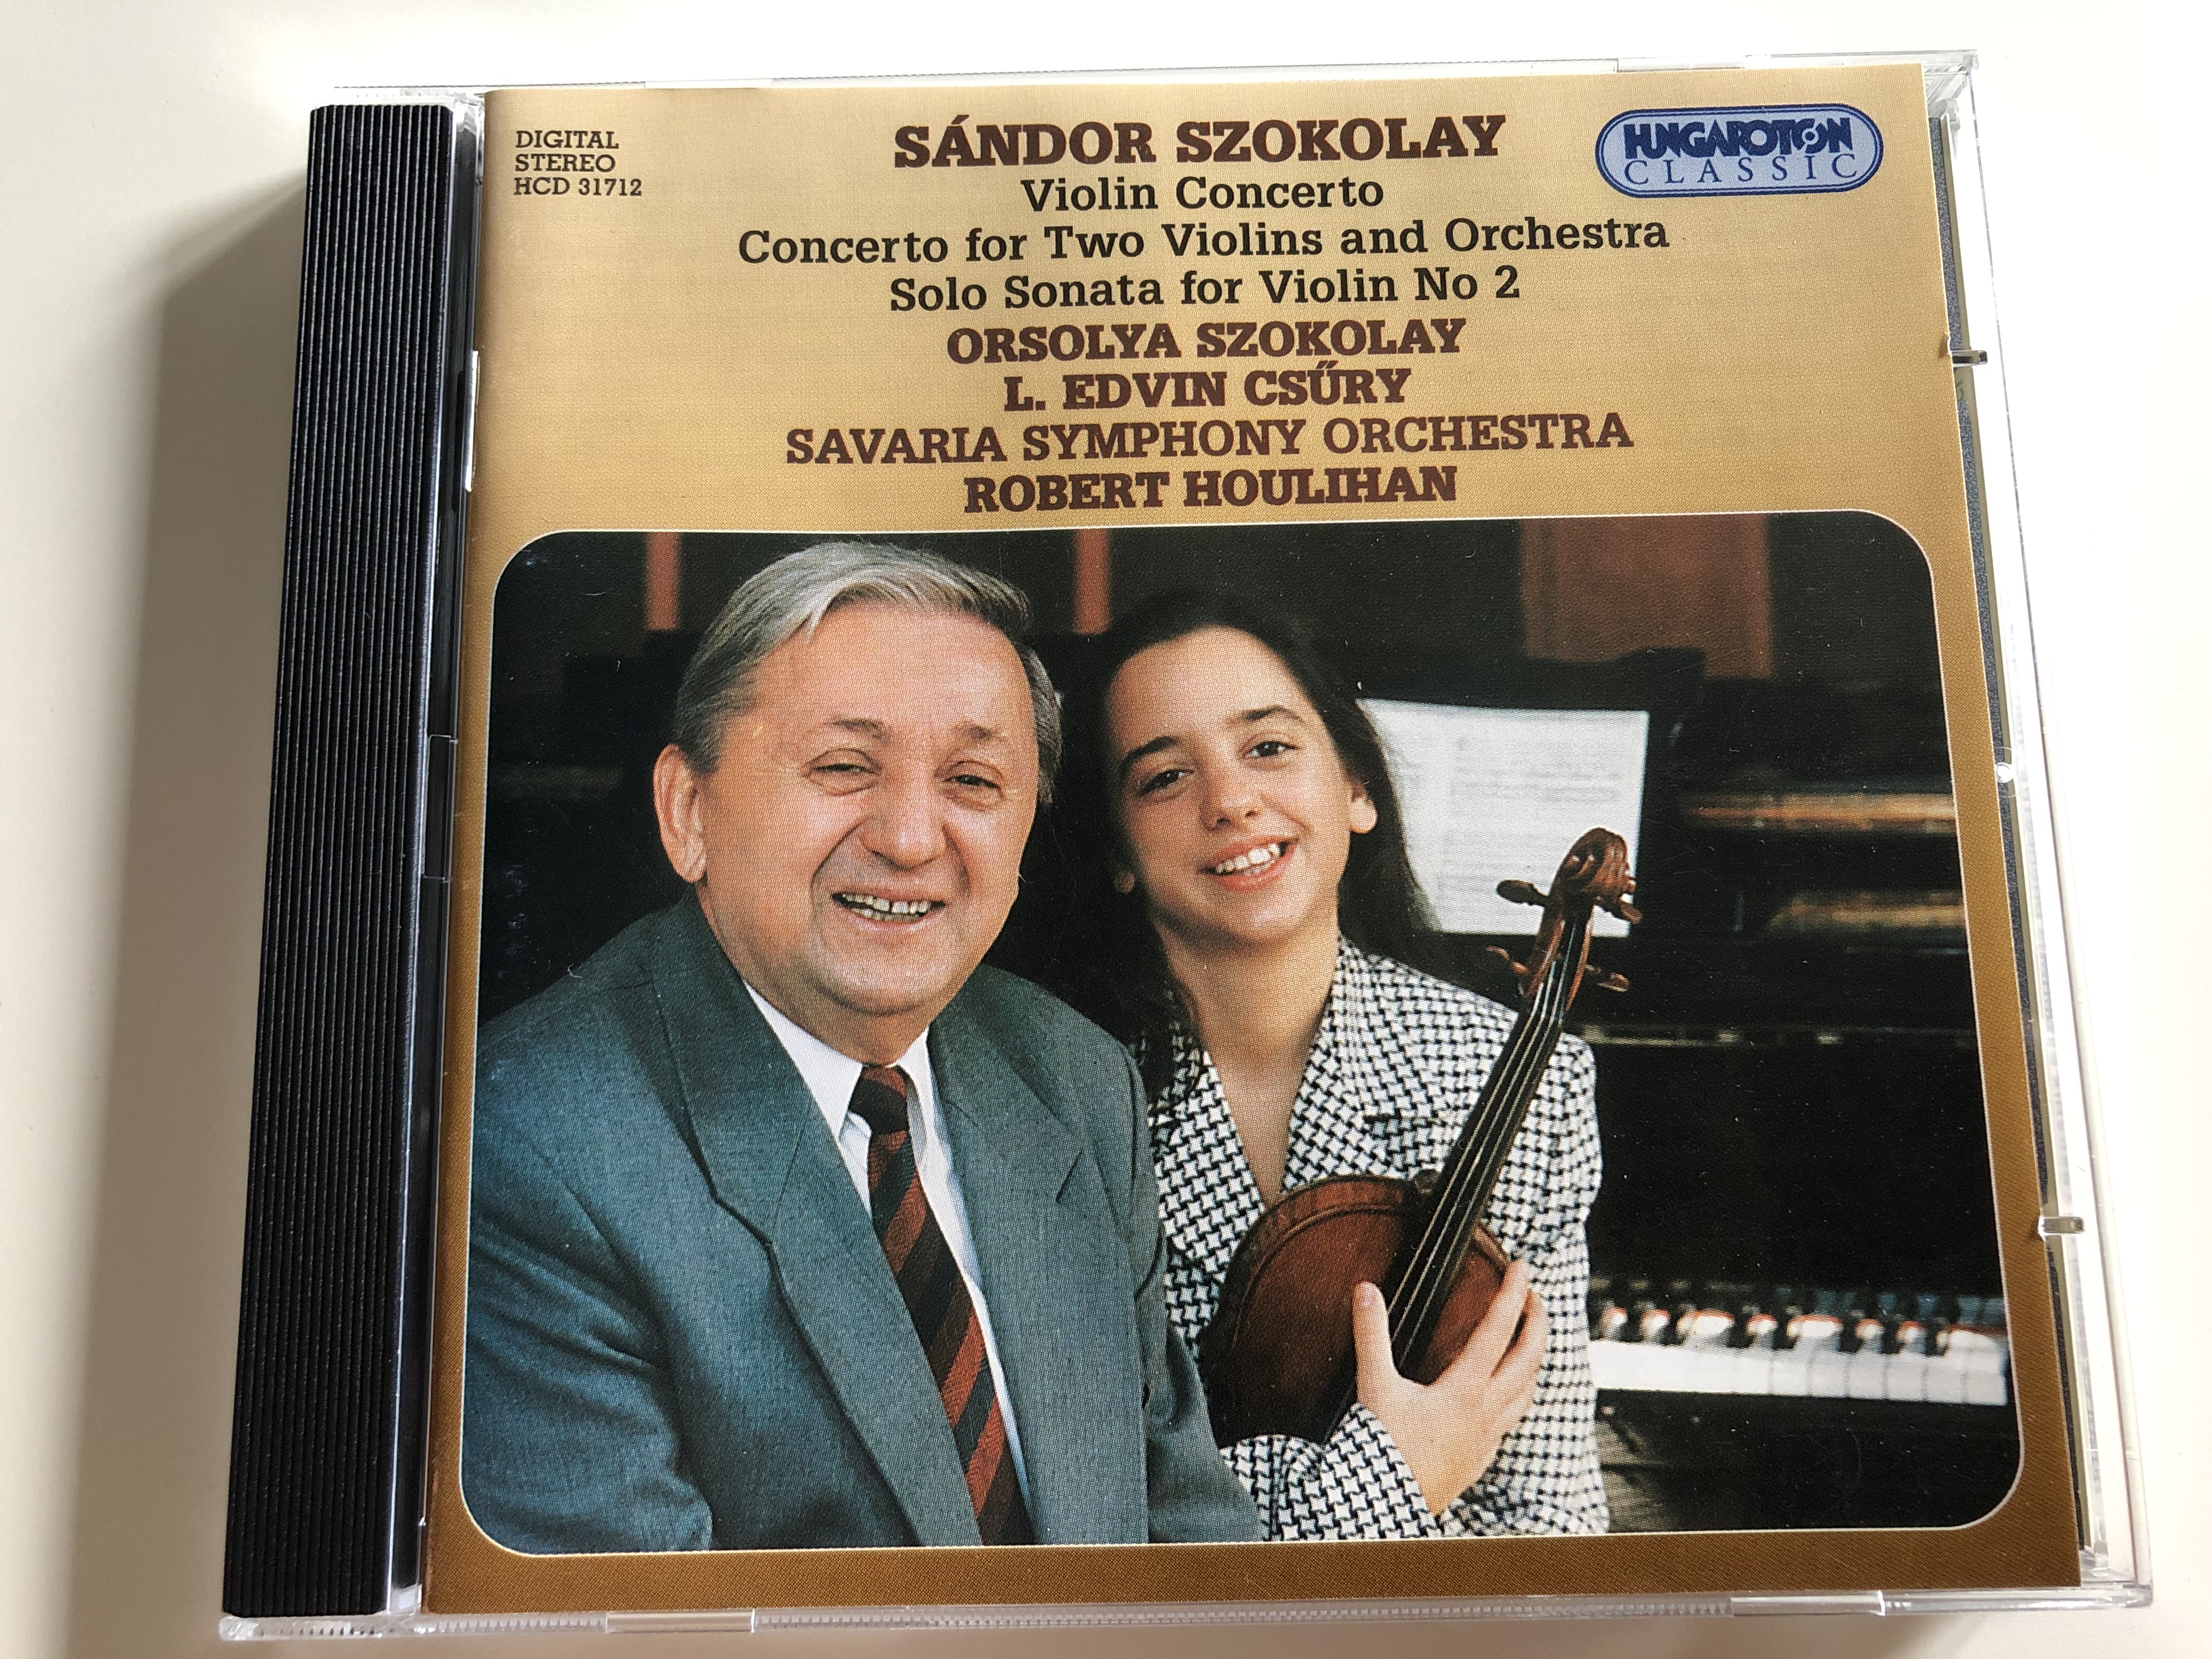 s-ndor-szokolay-violin-concerto-audio-cd-1997-concerto-for-two-violins-and-orchestra-solo-sonata-for-violin-no.-2-orsolya-szokolay-l.-edvin-cs-ry-savaria-symphony-orchestra-robert-houlihan-hungaroton-classic-hc-1-.jpg